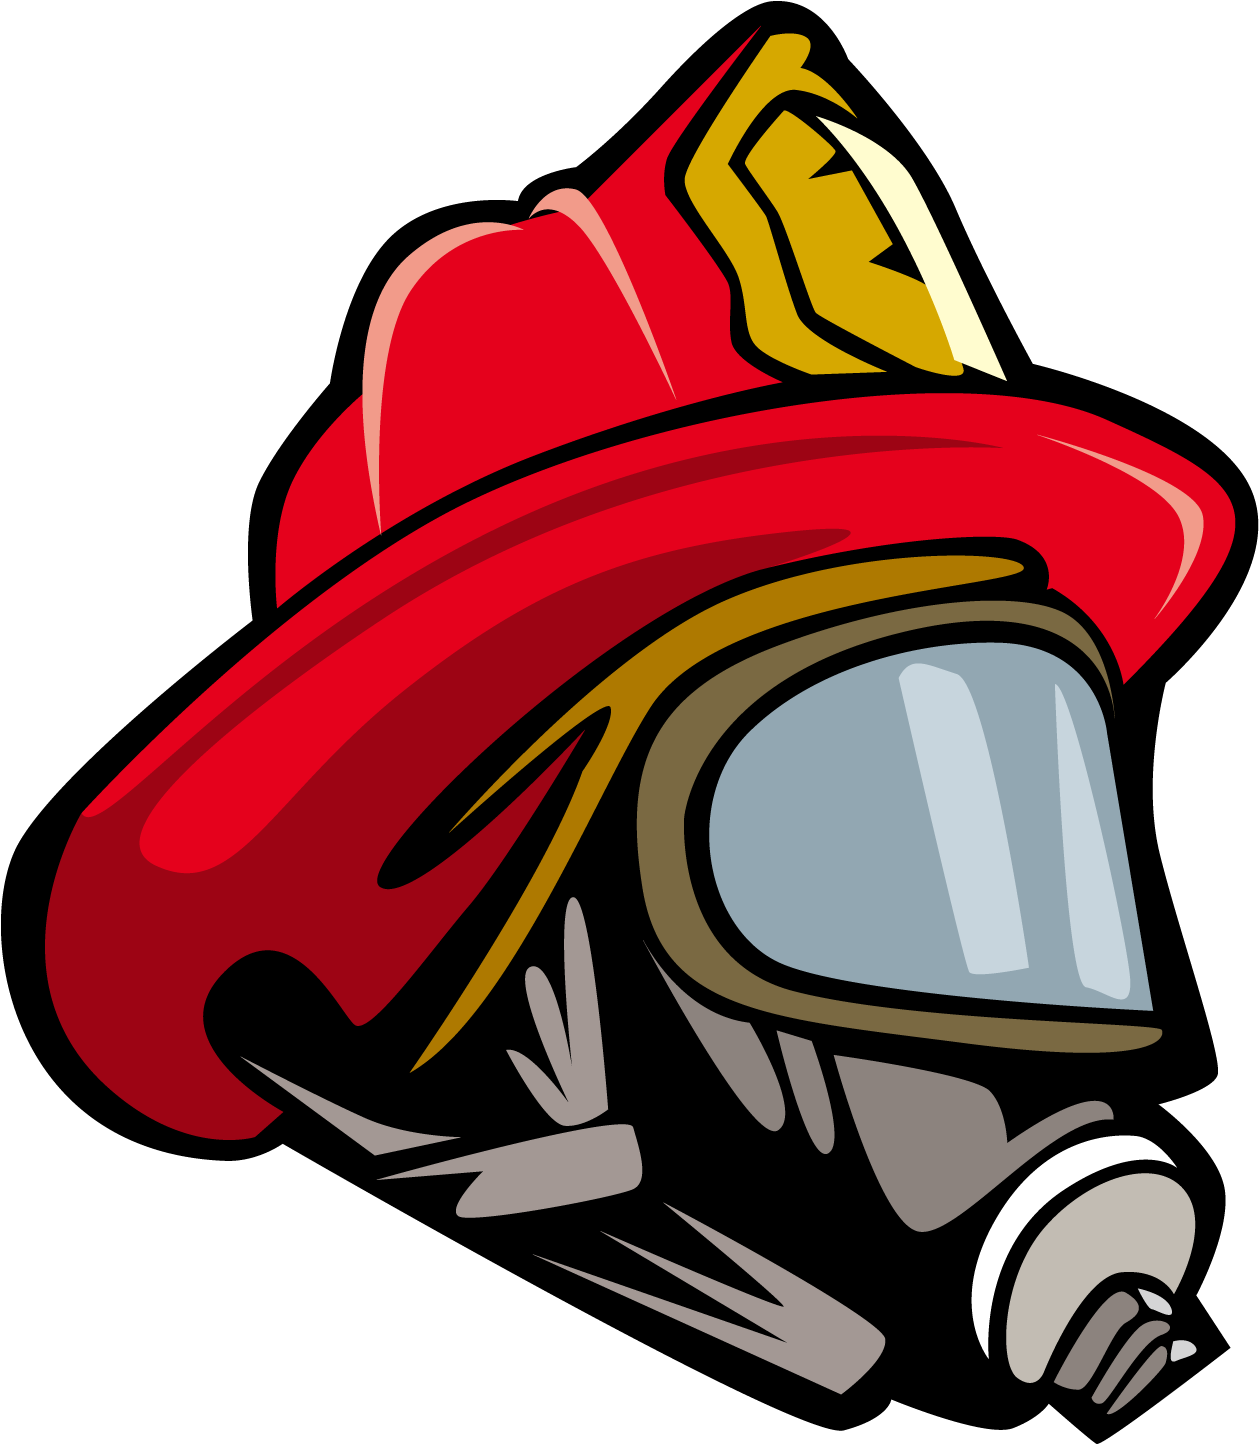 Firefighter Helmet Illustration PNG